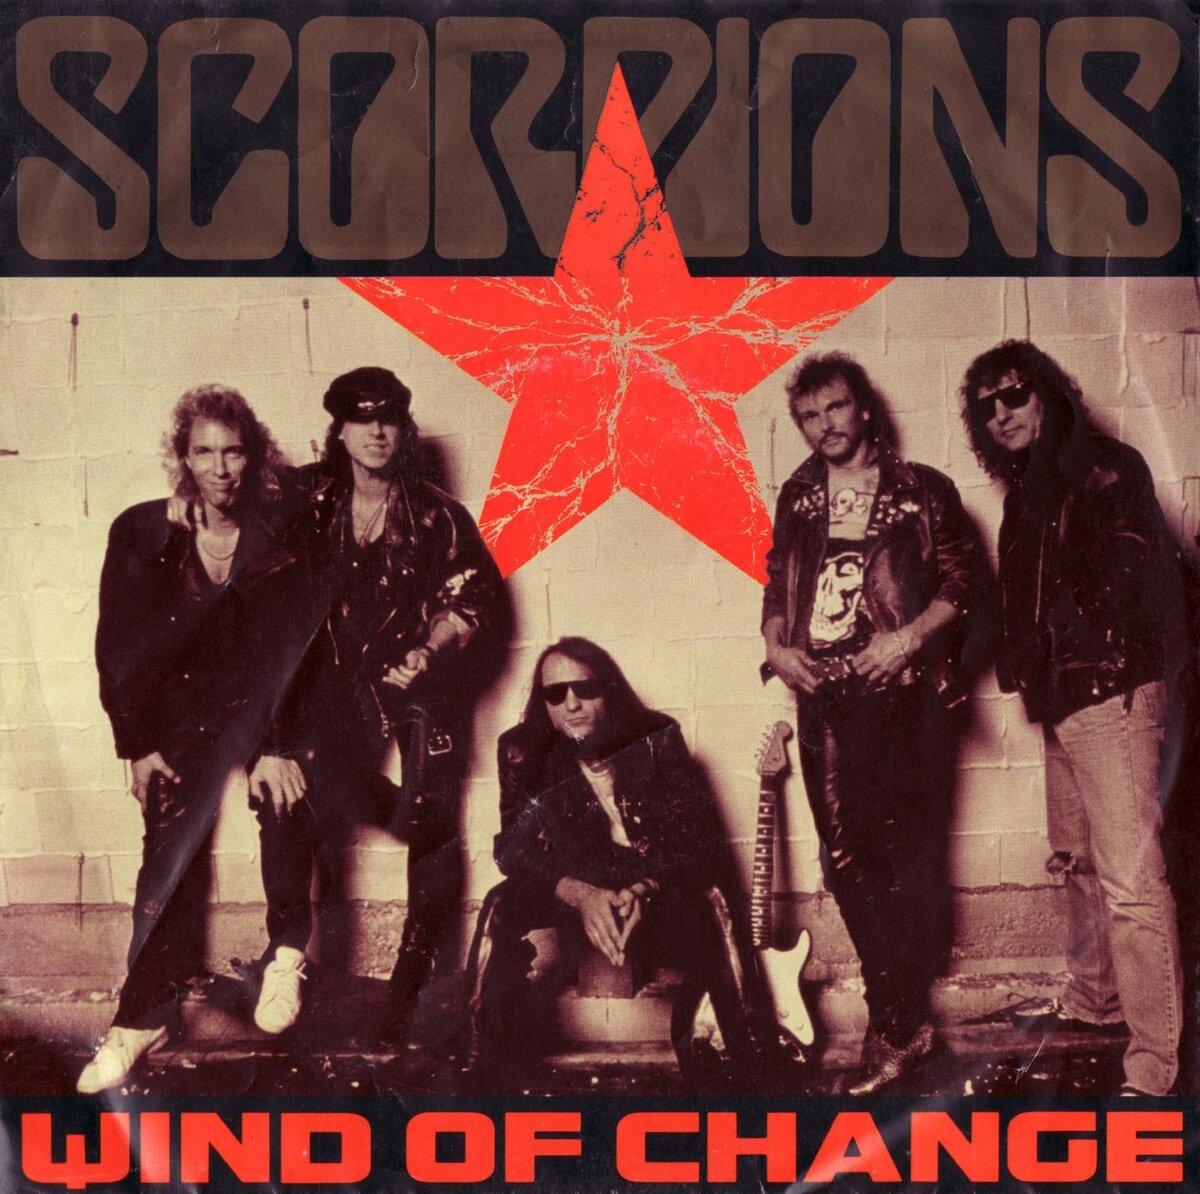 Scorpions Virgin Killer 1976 обложка. Scorpions 1975. Scorpions Wind of change обложка. Альбом Virgin Killer Scorpions. Скорпионс песня ветер